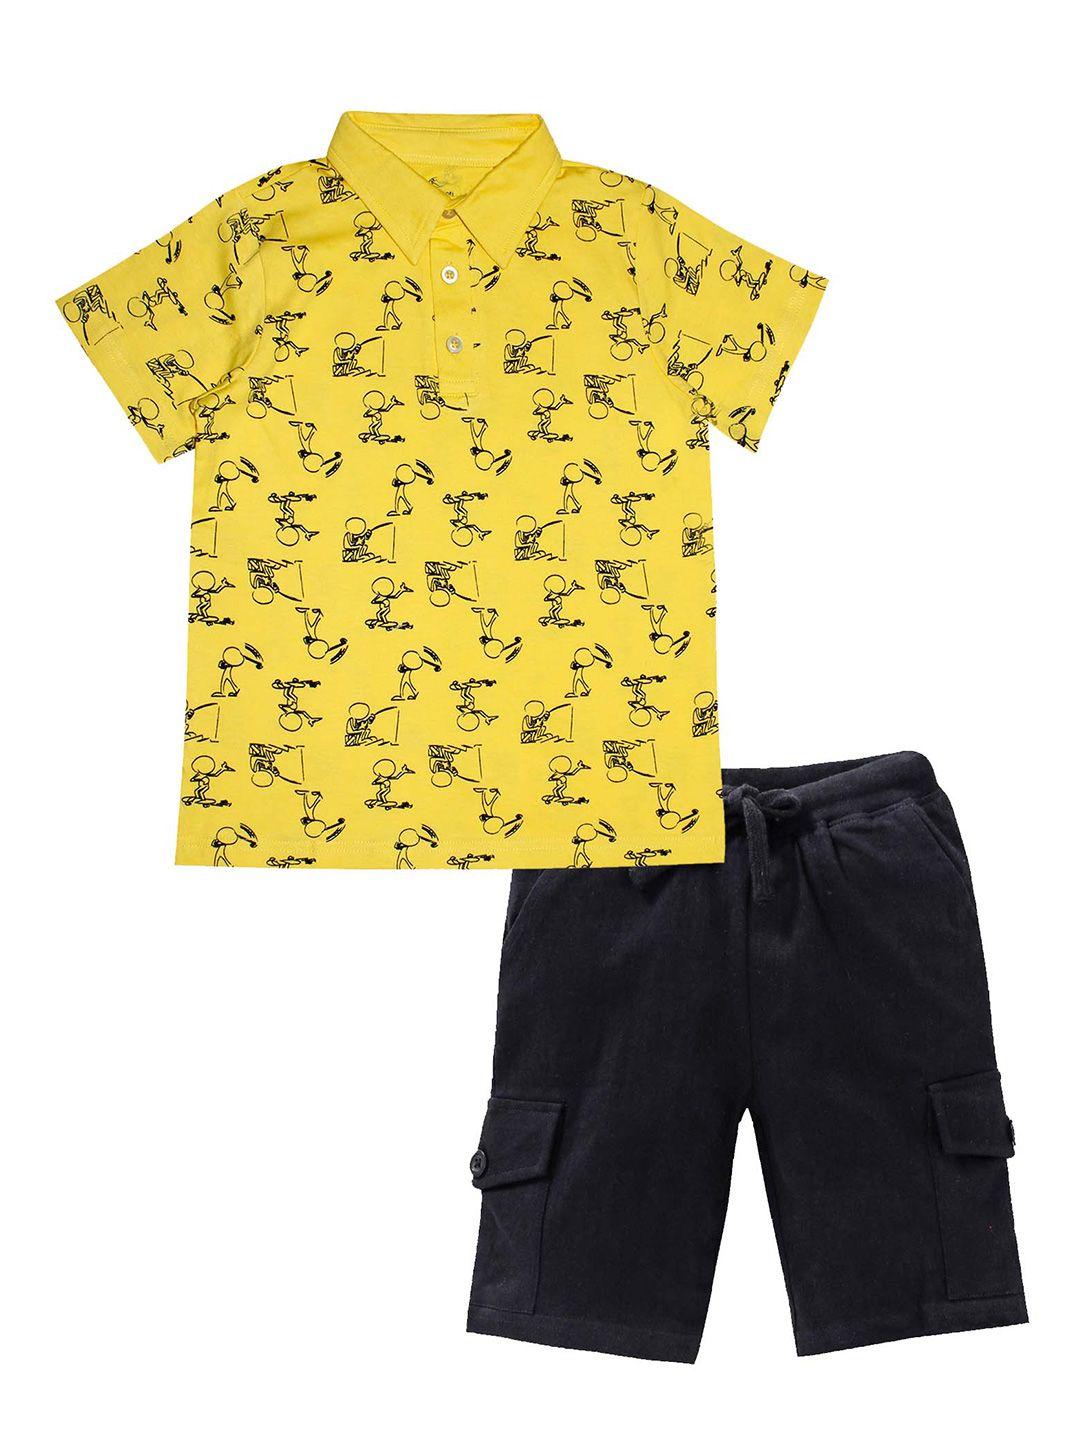 KiddoPanti Boys Yellow & Black Printed Pure Cotton T-shirt with Shorts